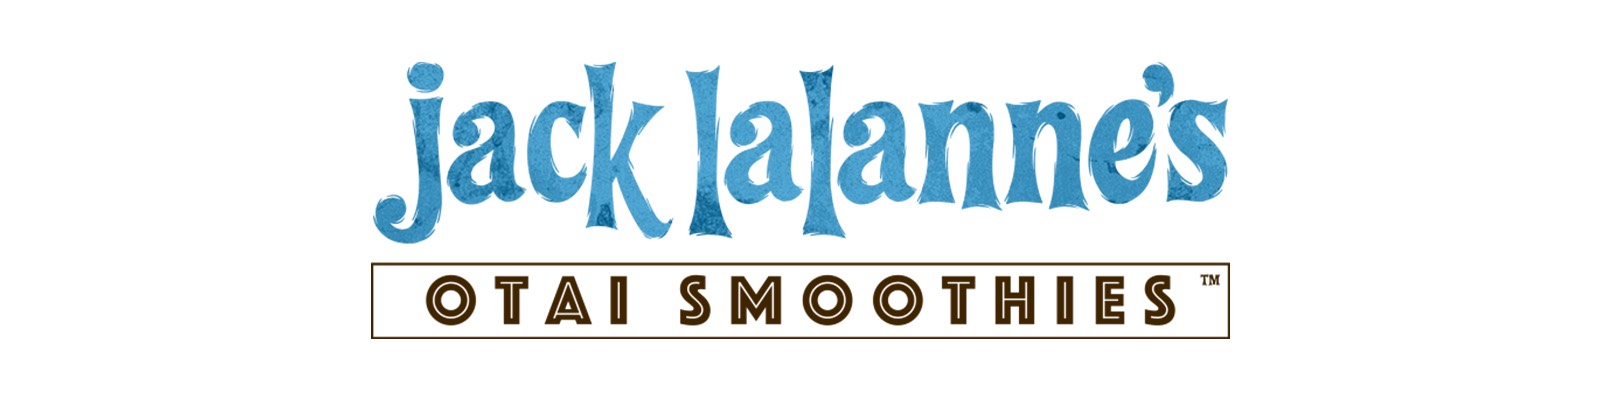 Jack LaLanne Otai Smoothies Brand Identity